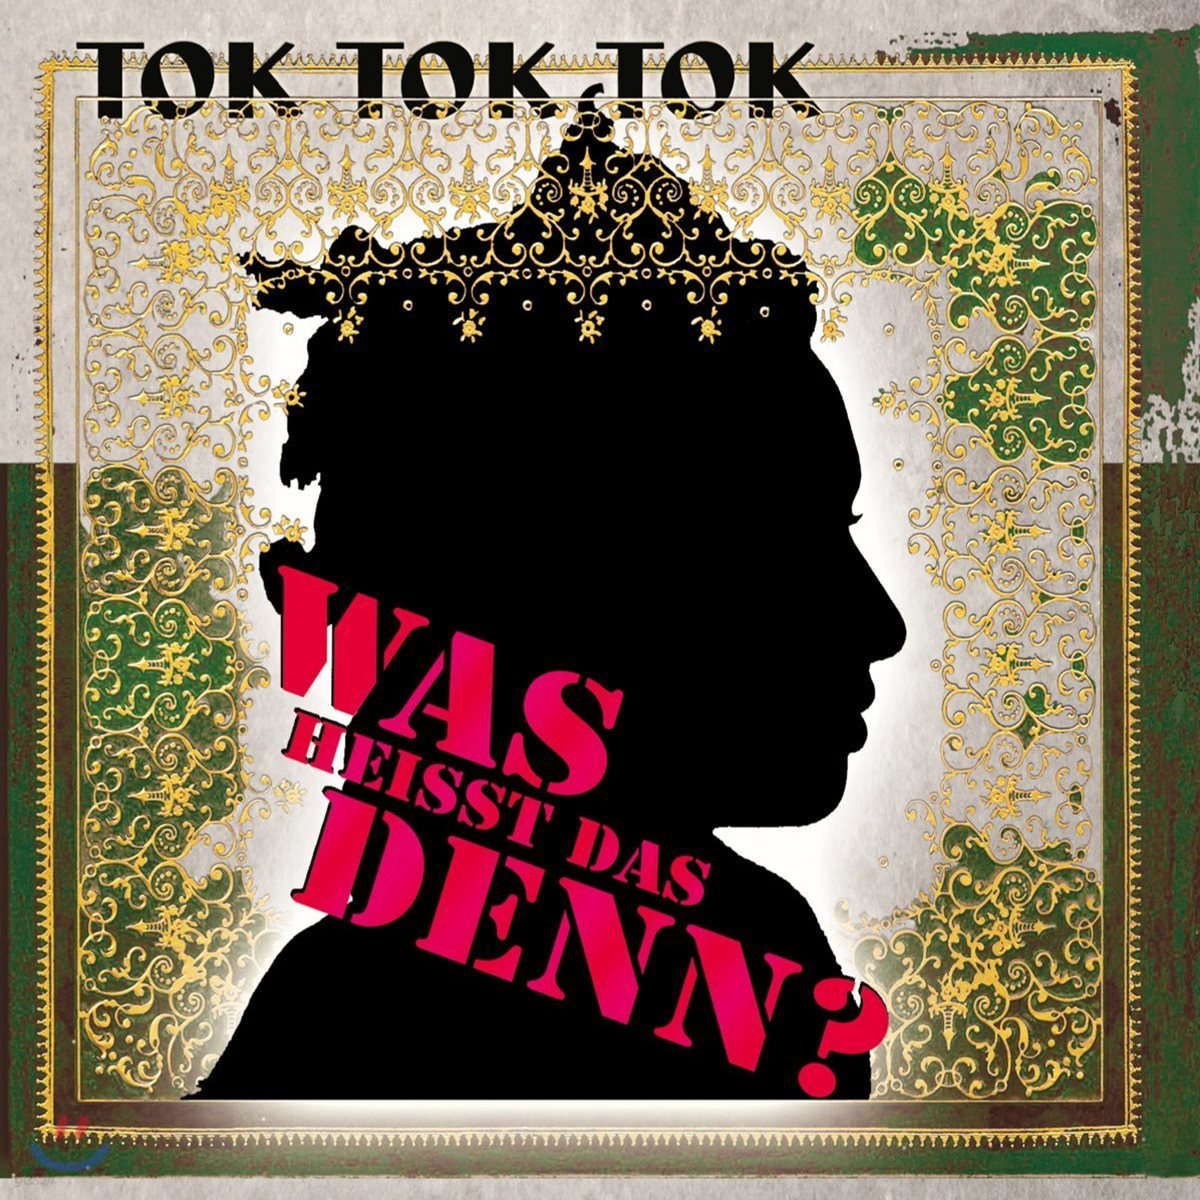 Tok Tok Tok (톡톡톡) - Was Heisst Das Denn? [2 LP]